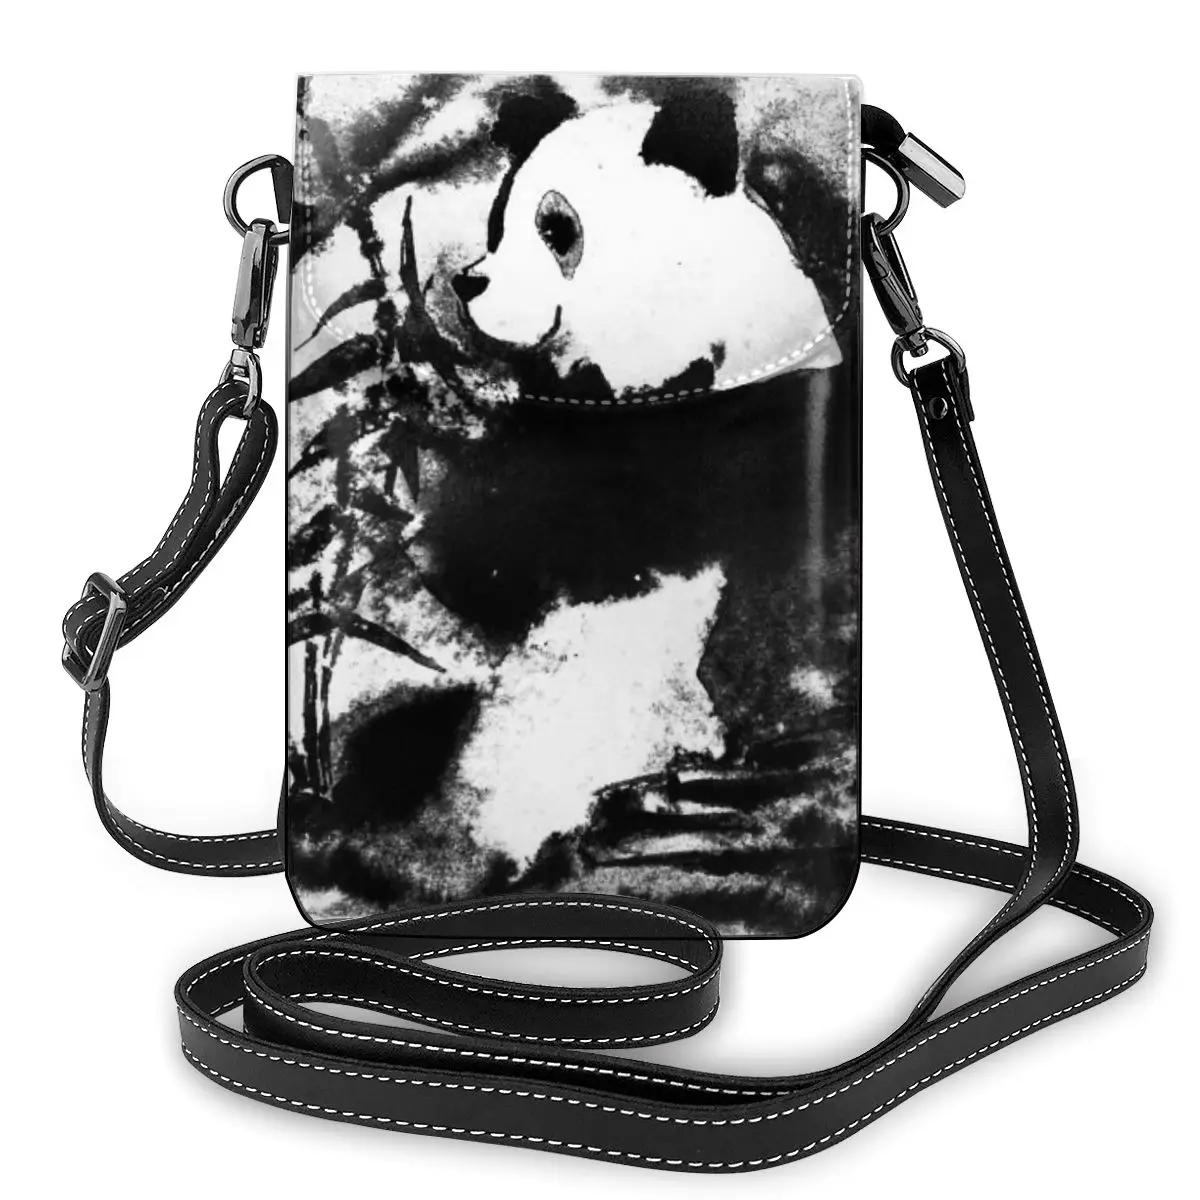 

Panda Print PU Leather Change Bag Women Small Crossbody Shoulder Bag Mobile Phone Pouch Handbag Female Bolso Messenger Bags